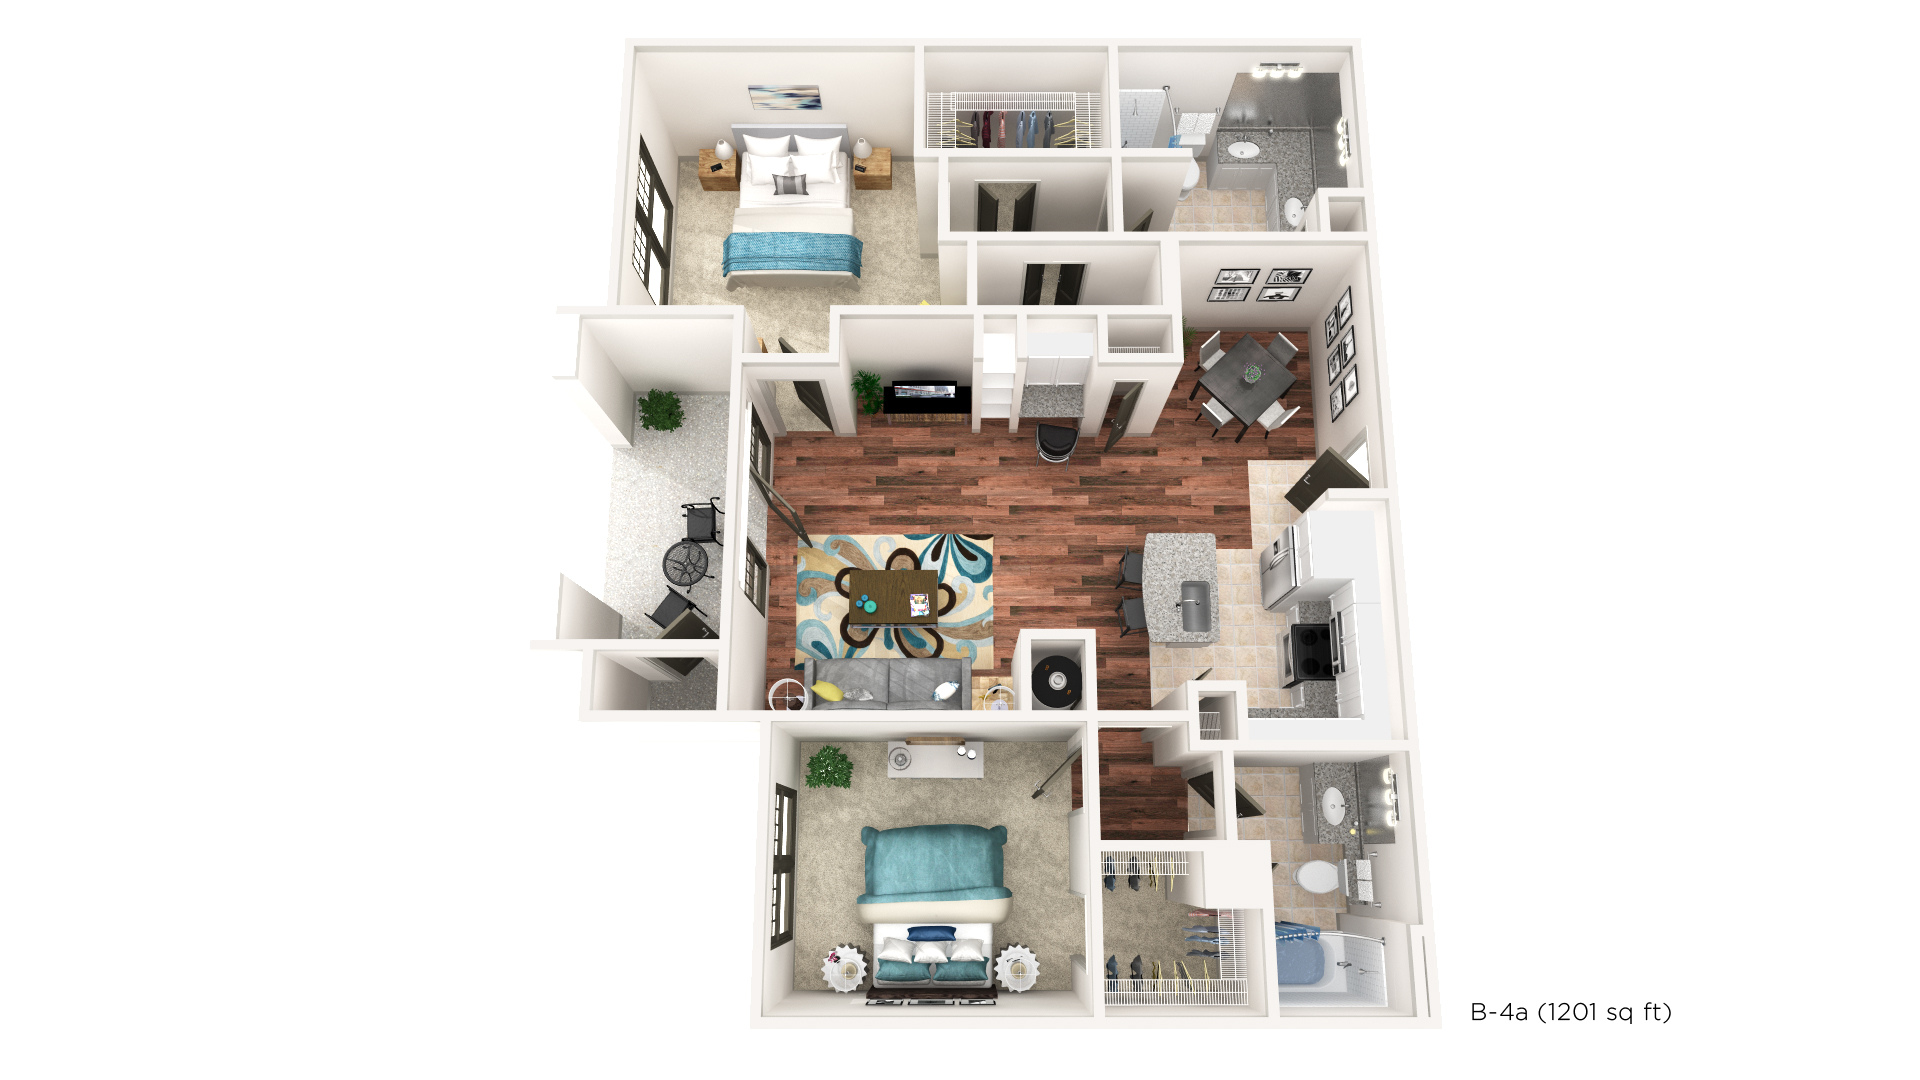 Brookleigh Flats Luxury Apartment Homes - Floorplan - B-4A